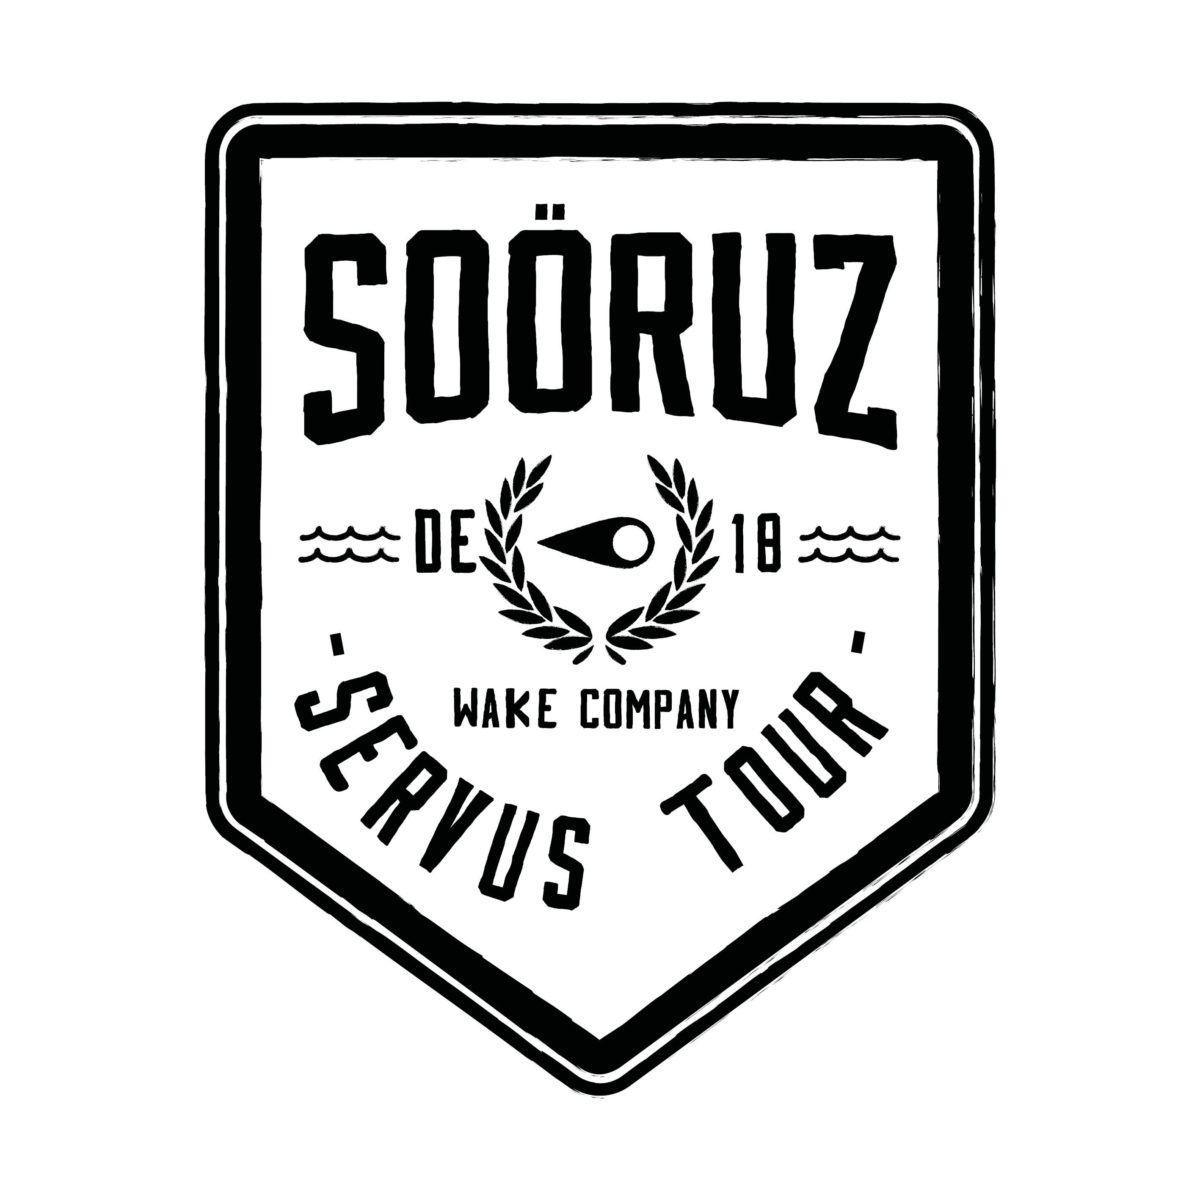 Surfwear Company Logo - logo SST black - Sooruz Surfwear